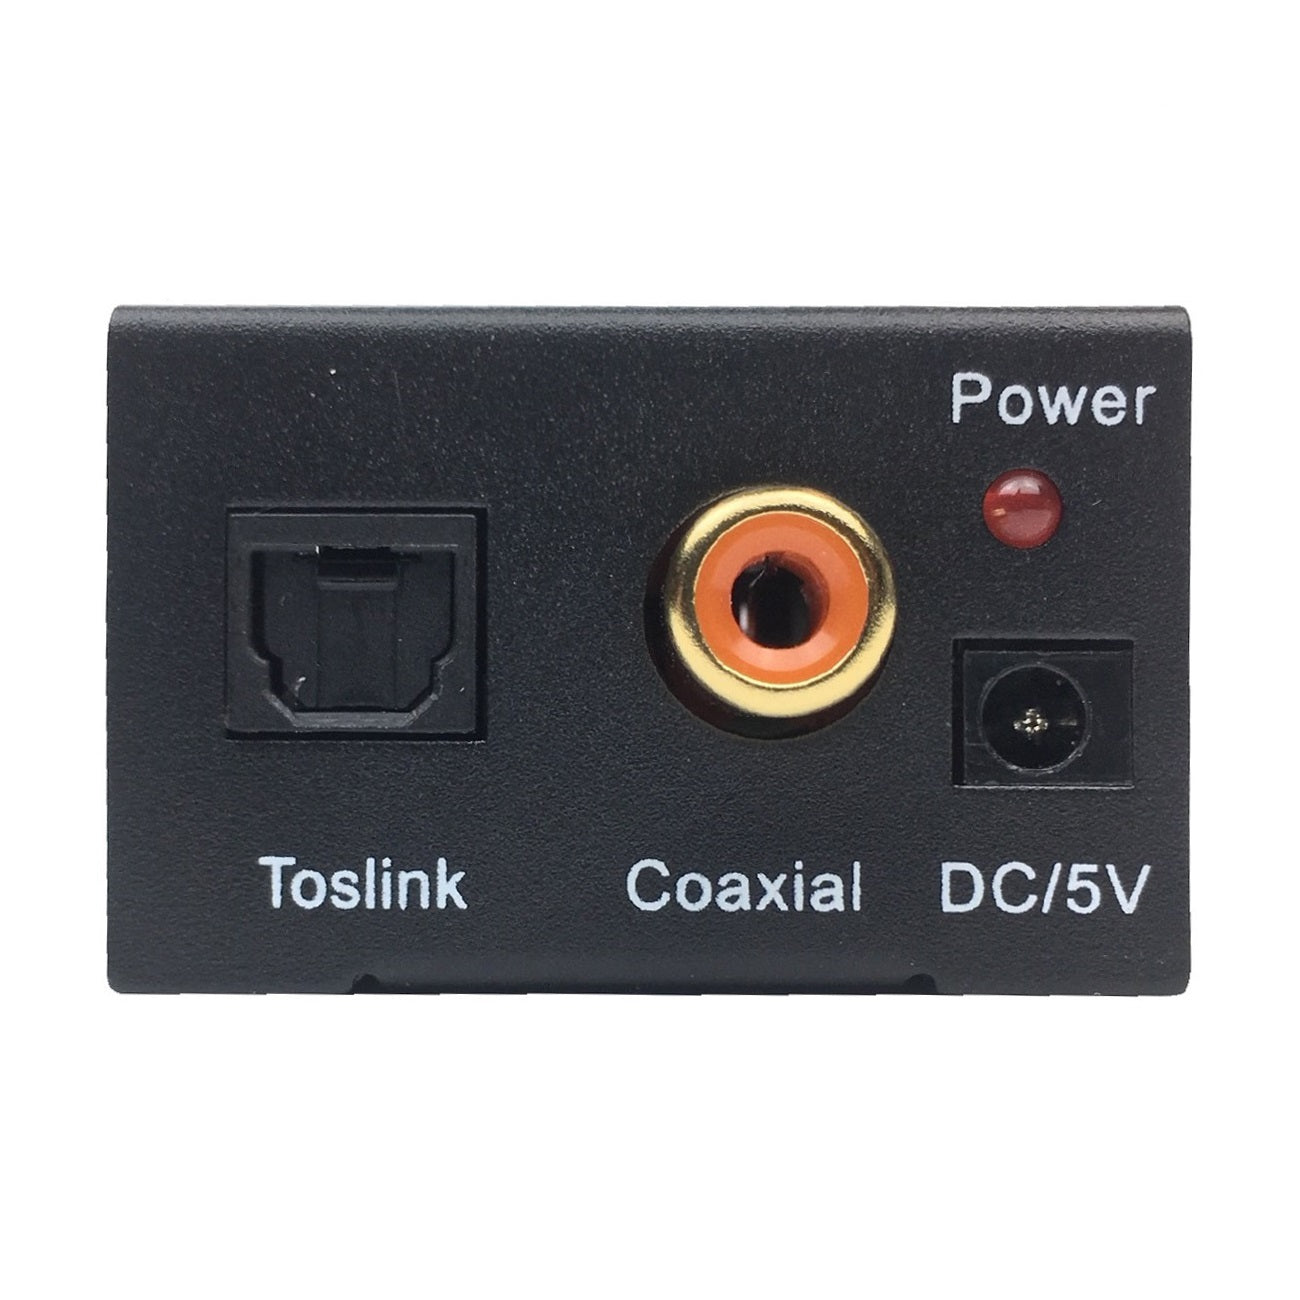 VocoPro DA-2808VE Karaoke Mixer with Optical Input for Smart TV Karaoke